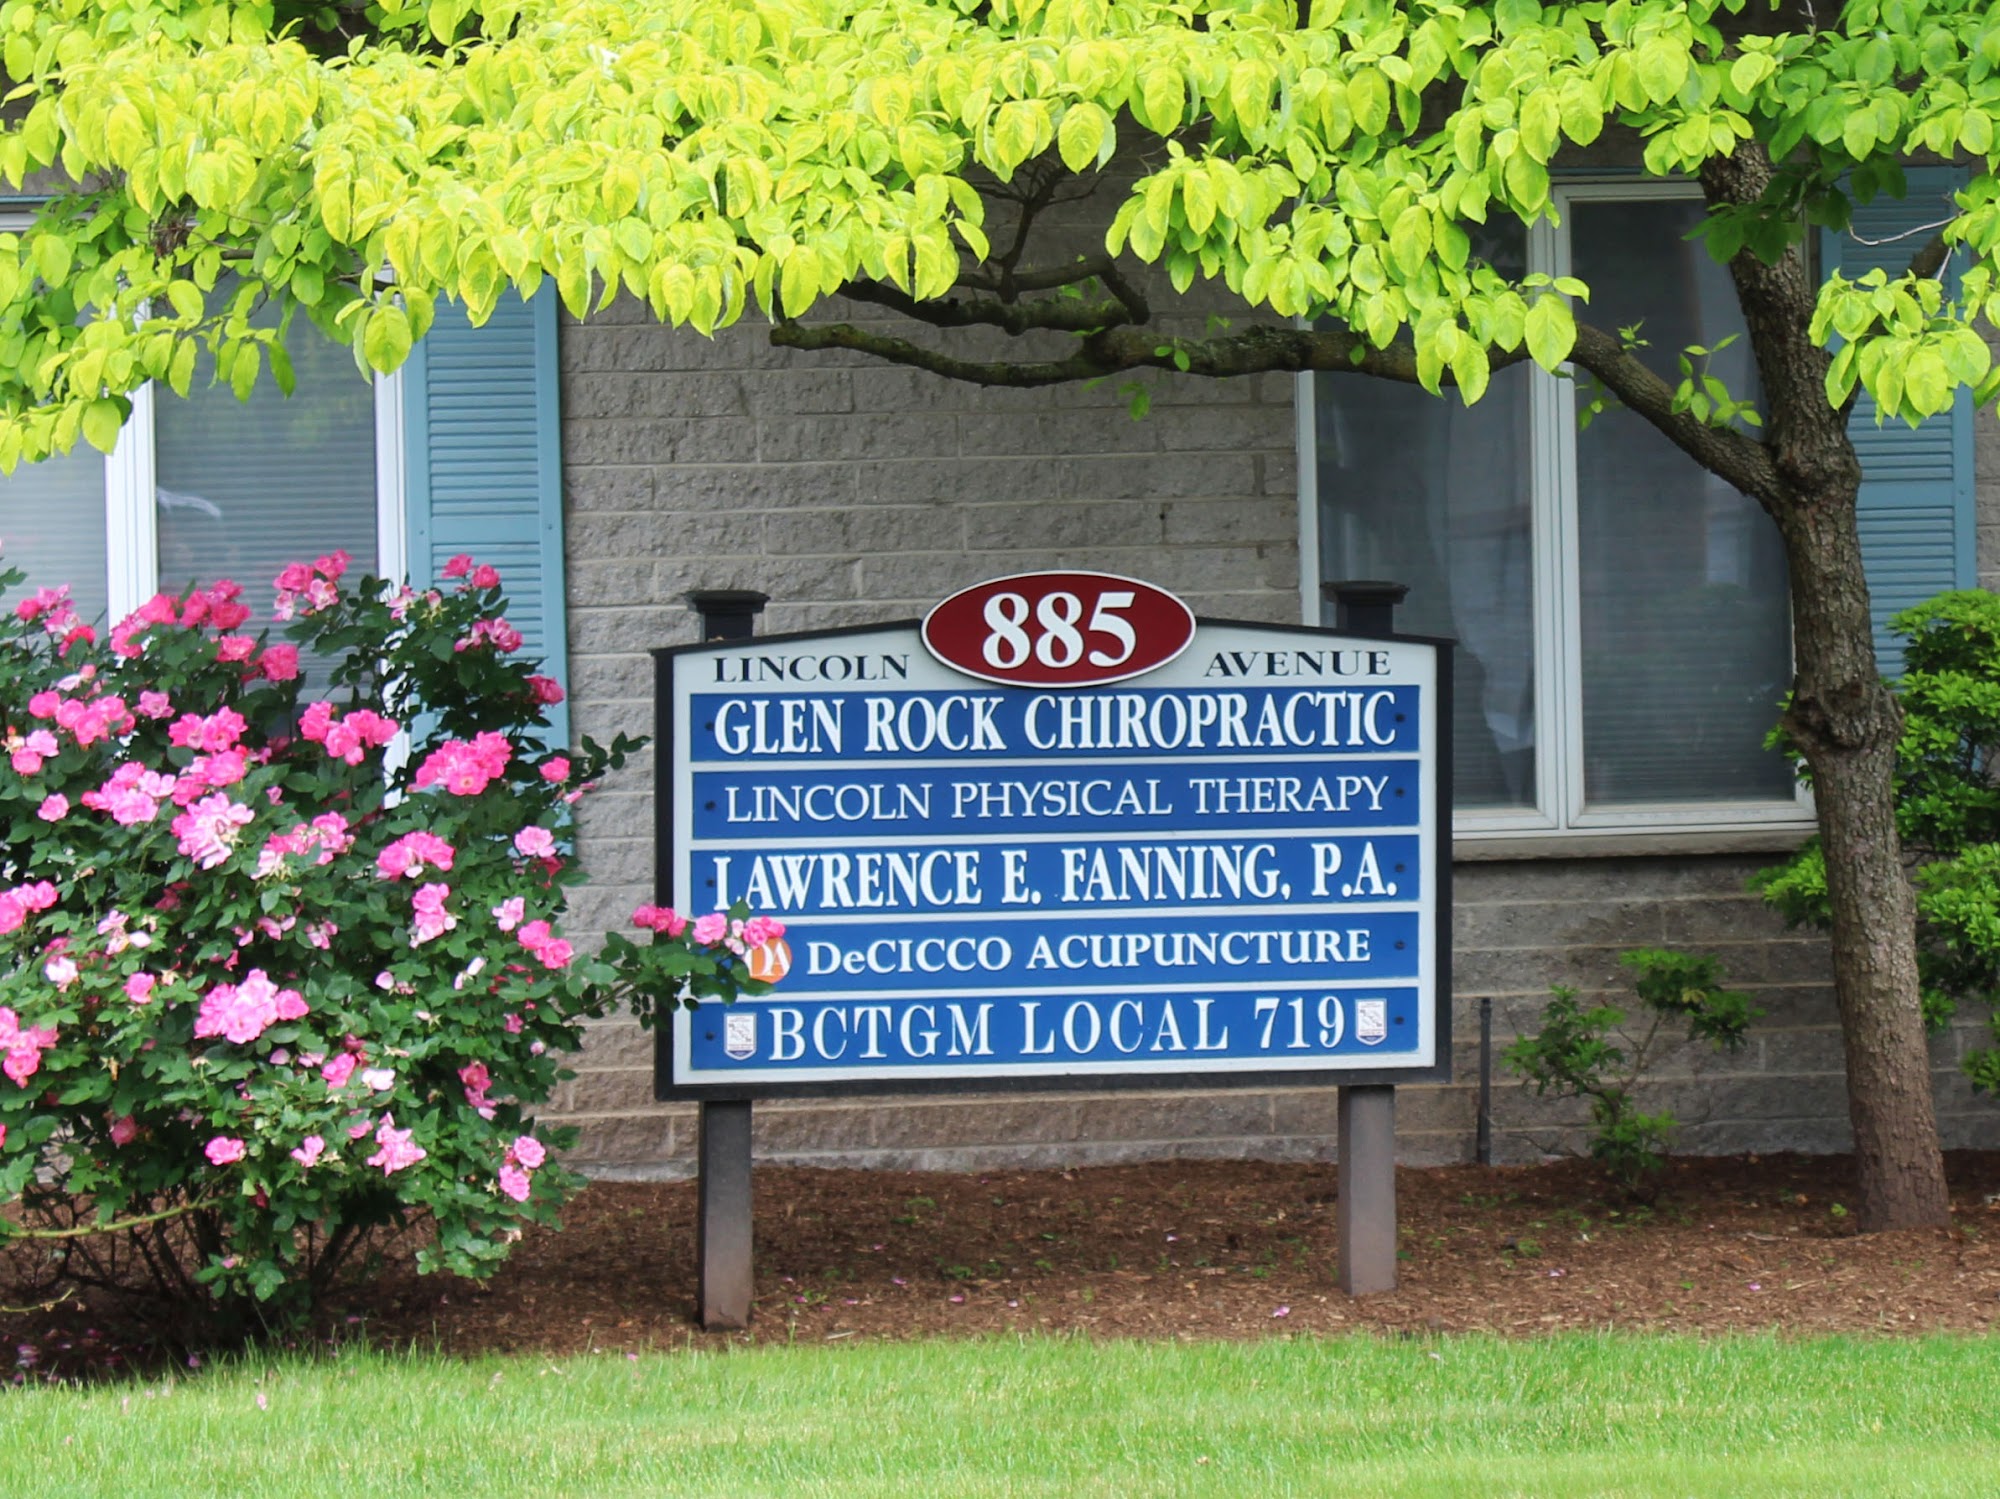 Glen Rock Chiropractic Center: Dr. David Czerminski 885 Lincoln Ave, Glen Rock New Jersey 07452